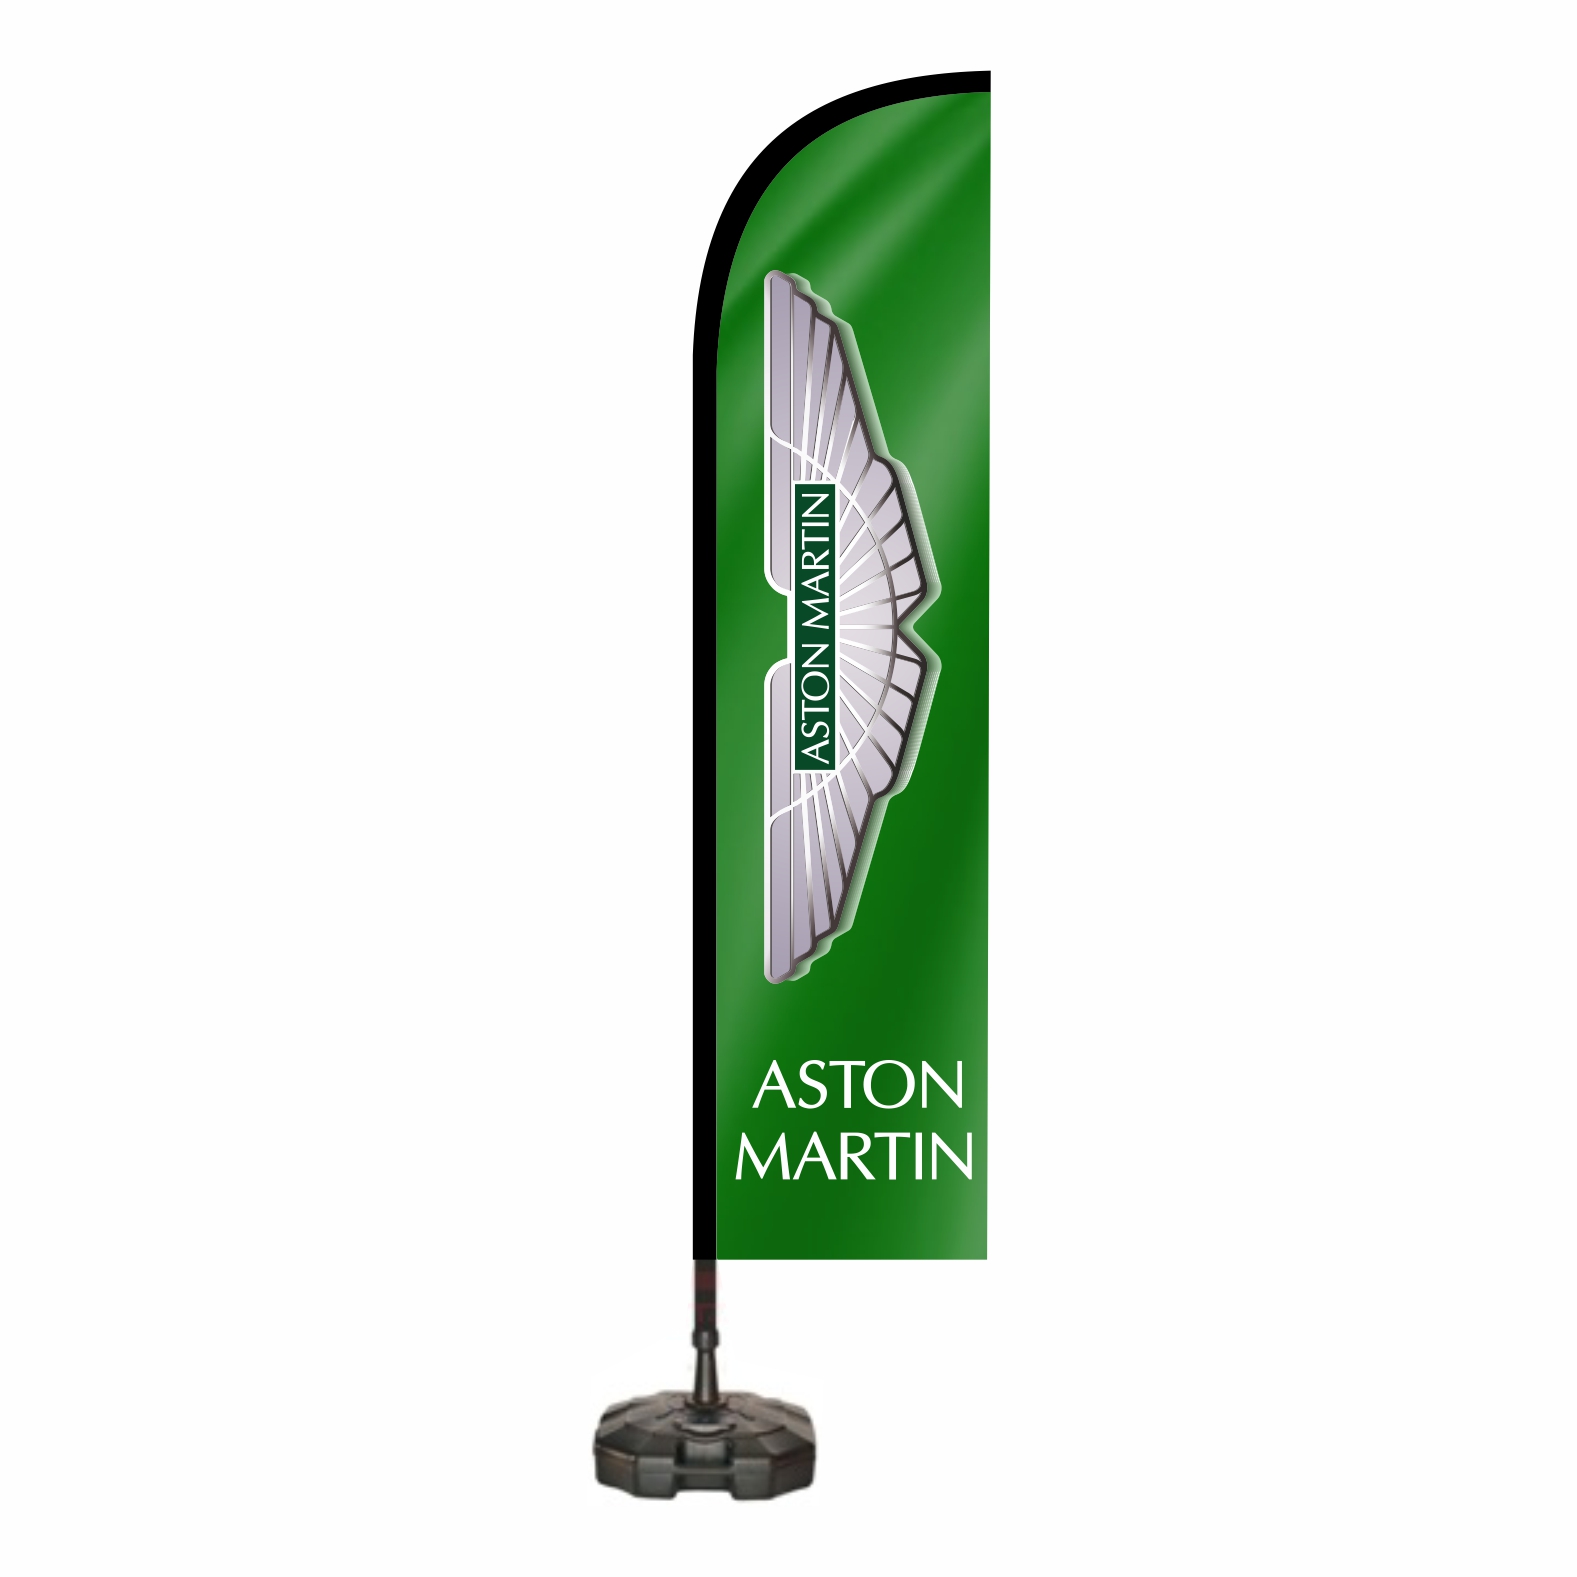 Aston Martin Oltal Bayra Nerede Yaptrlr